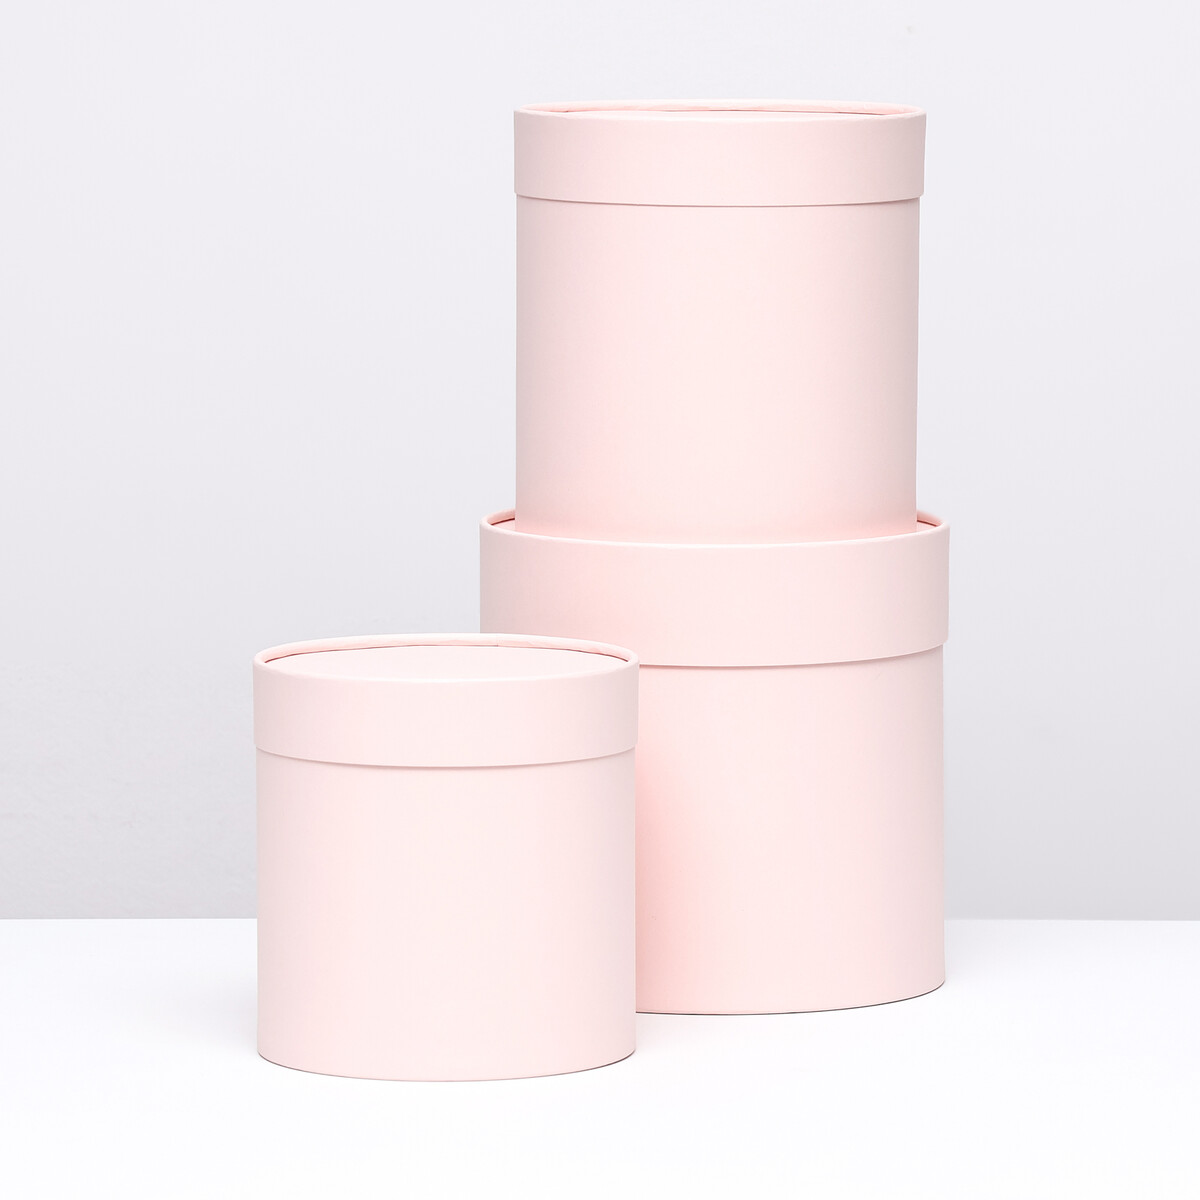 Набор коробок 3 в 1 без окна, розовый лепесток(перламутр) 21 х 21 - 16 х 16 см багровый лепесток и белый